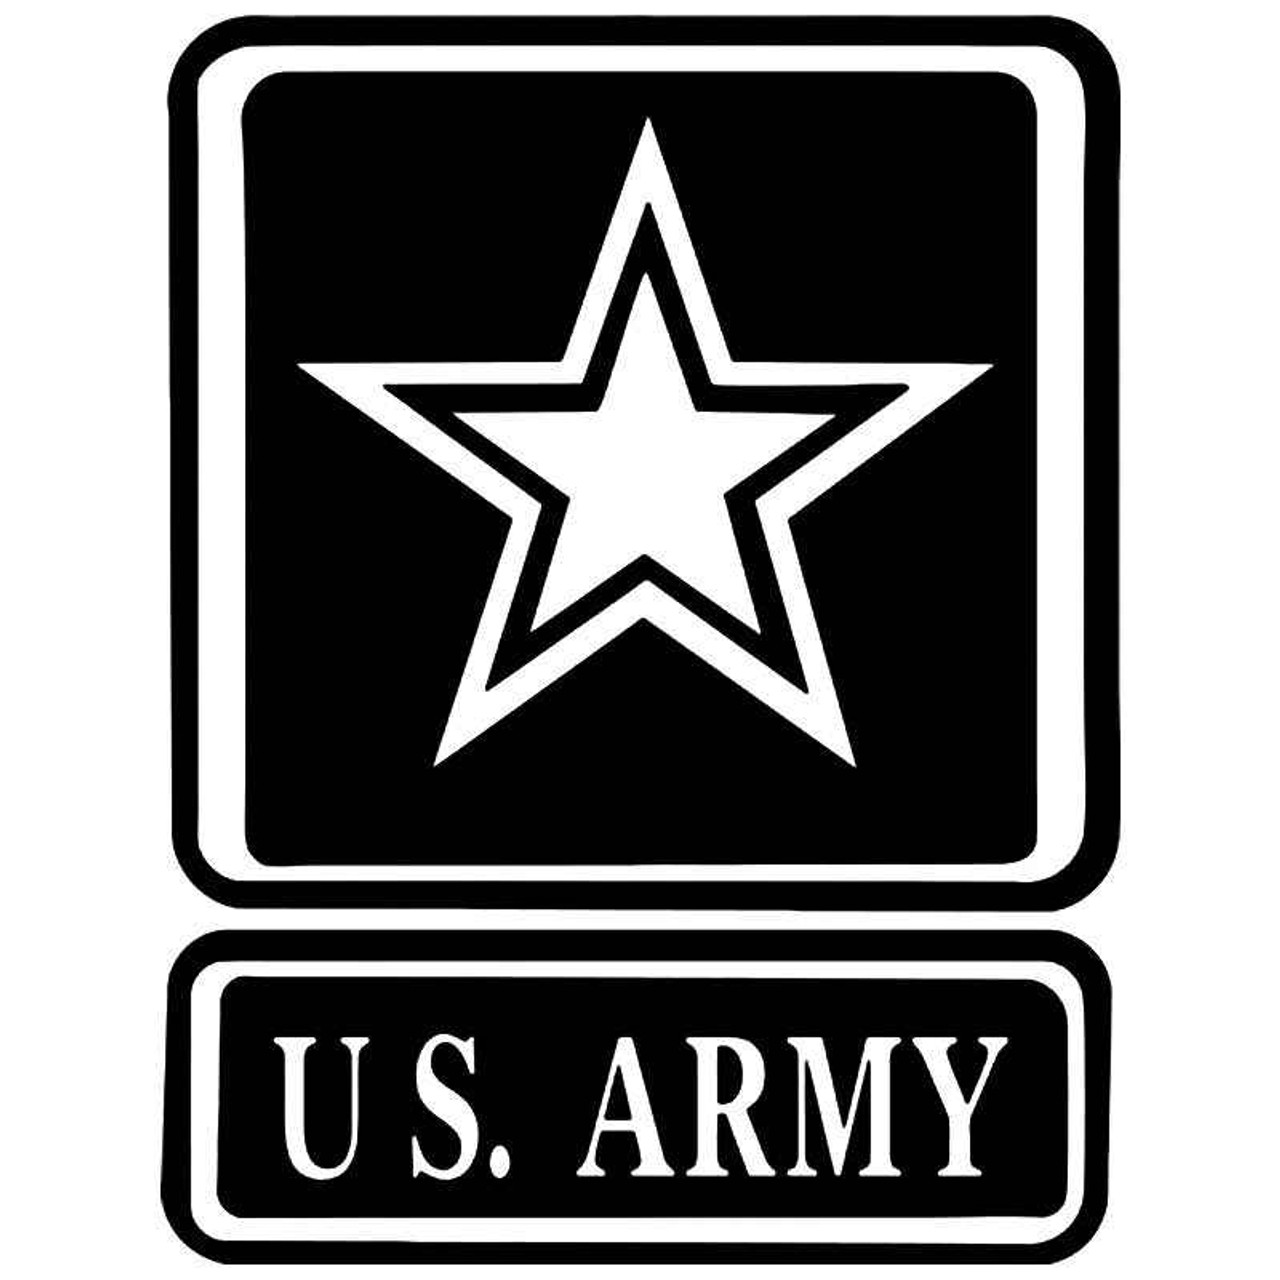 U.S. Army Emblem Vinyl Sticker